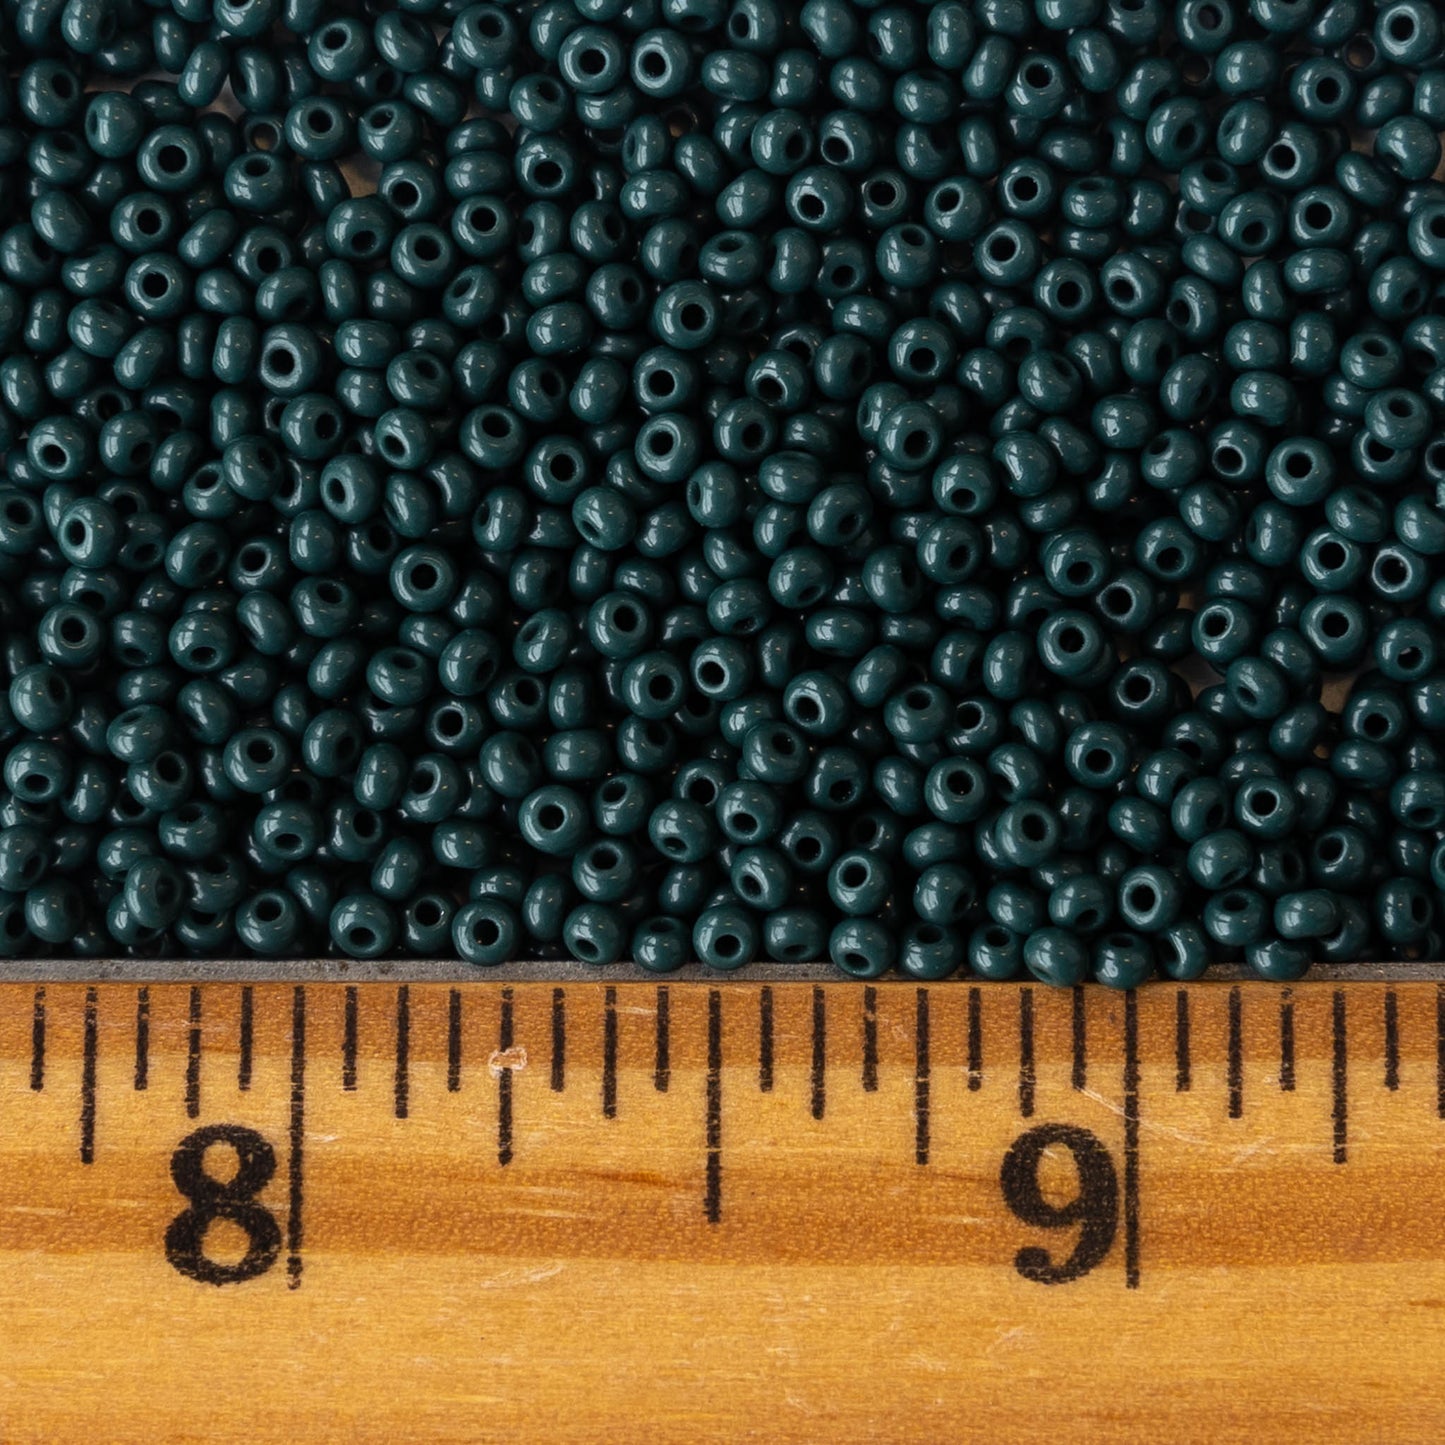 Load image into Gallery viewer, 11/0 Seed Beads - Opaque Dark Jade - 24 gram Tube
